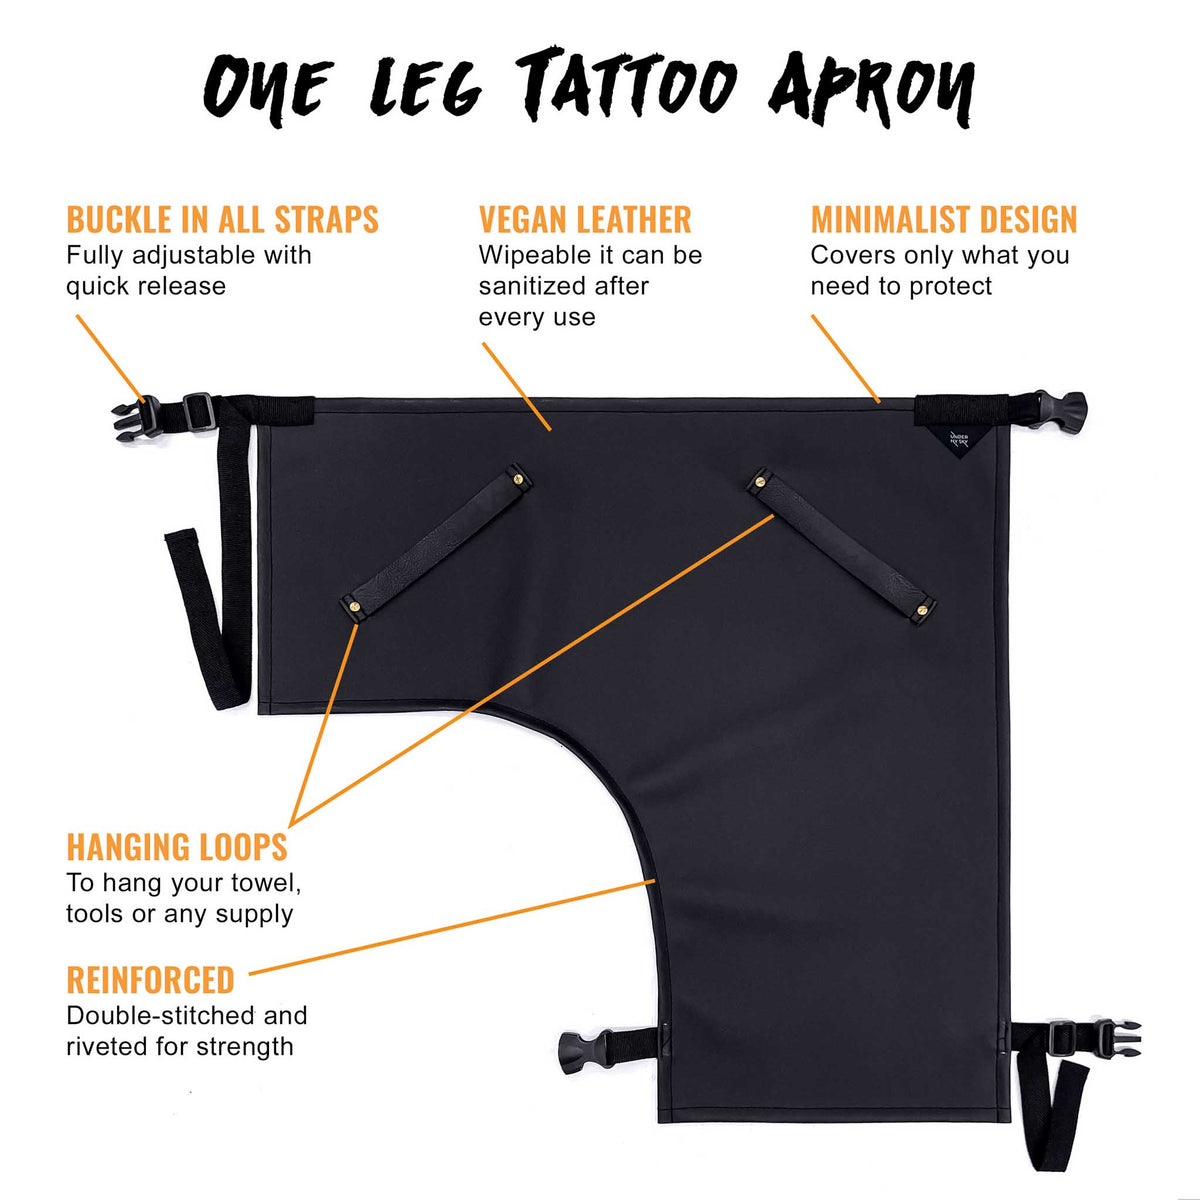 One Leg Tattoo Apron Details - Vegan Leather 